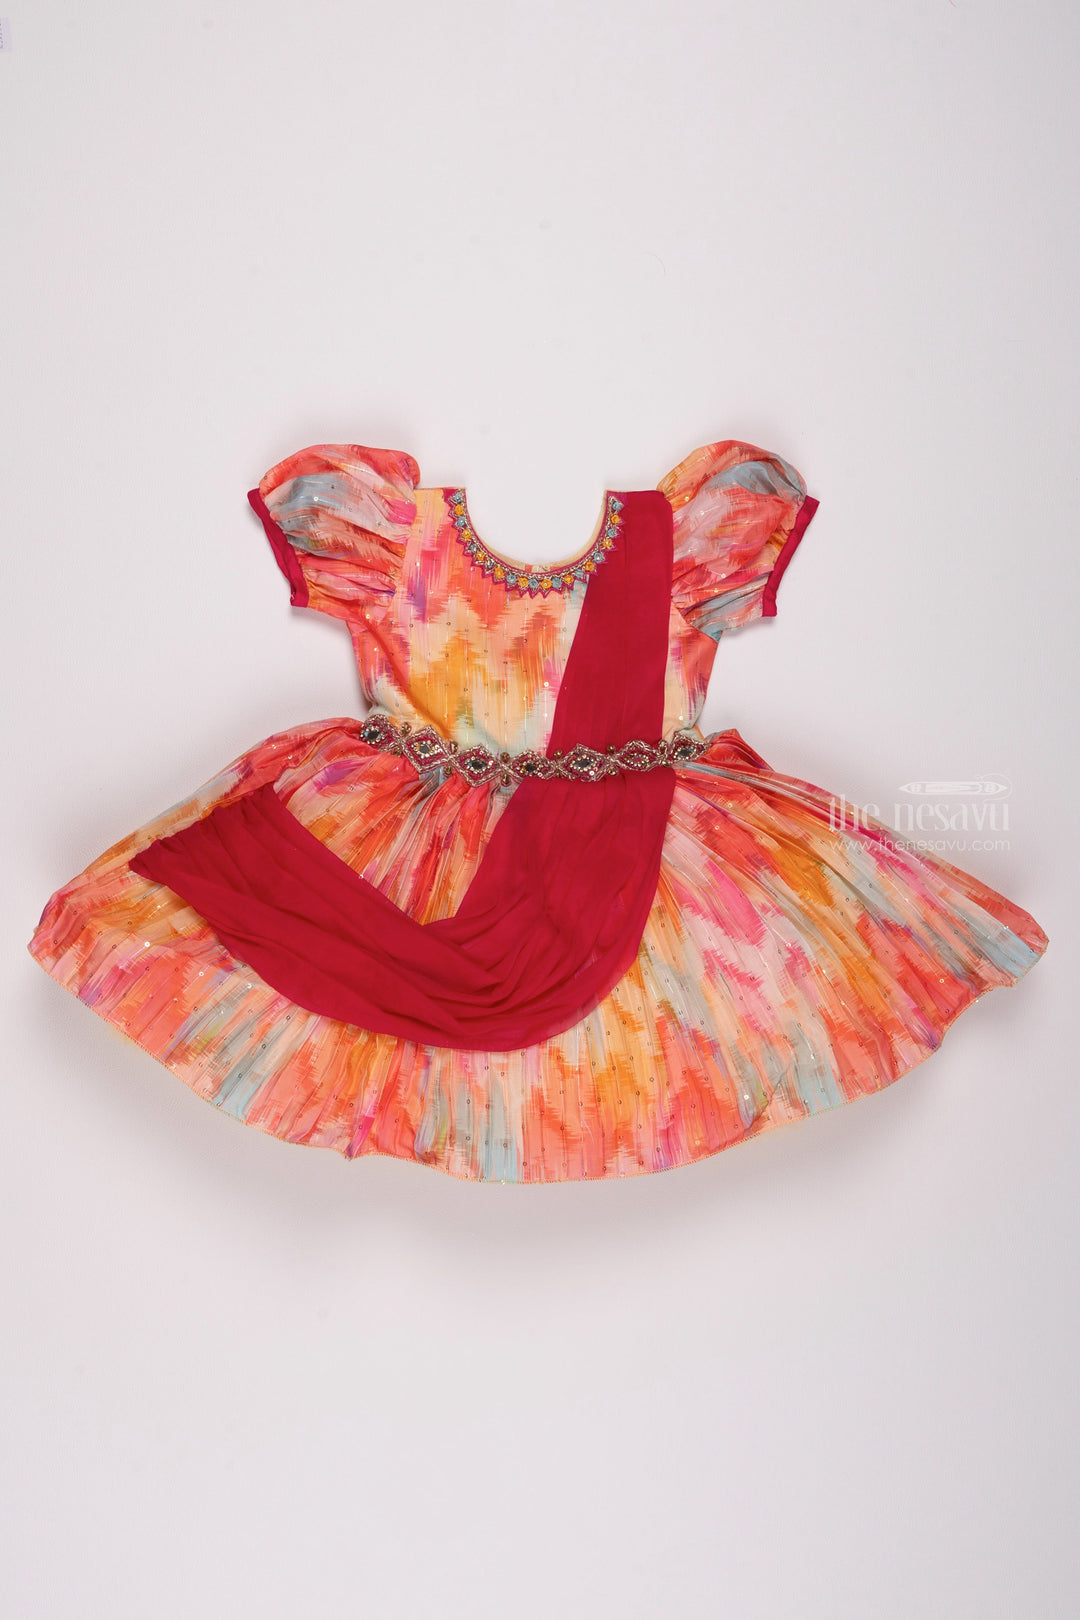 The Nesavu Girls Fancy Party Frock Baby Girls' Radiance: Zari-Embellished Tie-Dye Festive Gown with Flowing Dupatta Nesavu 18 (2Y) / Multi color / Organza PF135A-18 Trendy children's party dresses | Girls evening dresses | The Nesavu